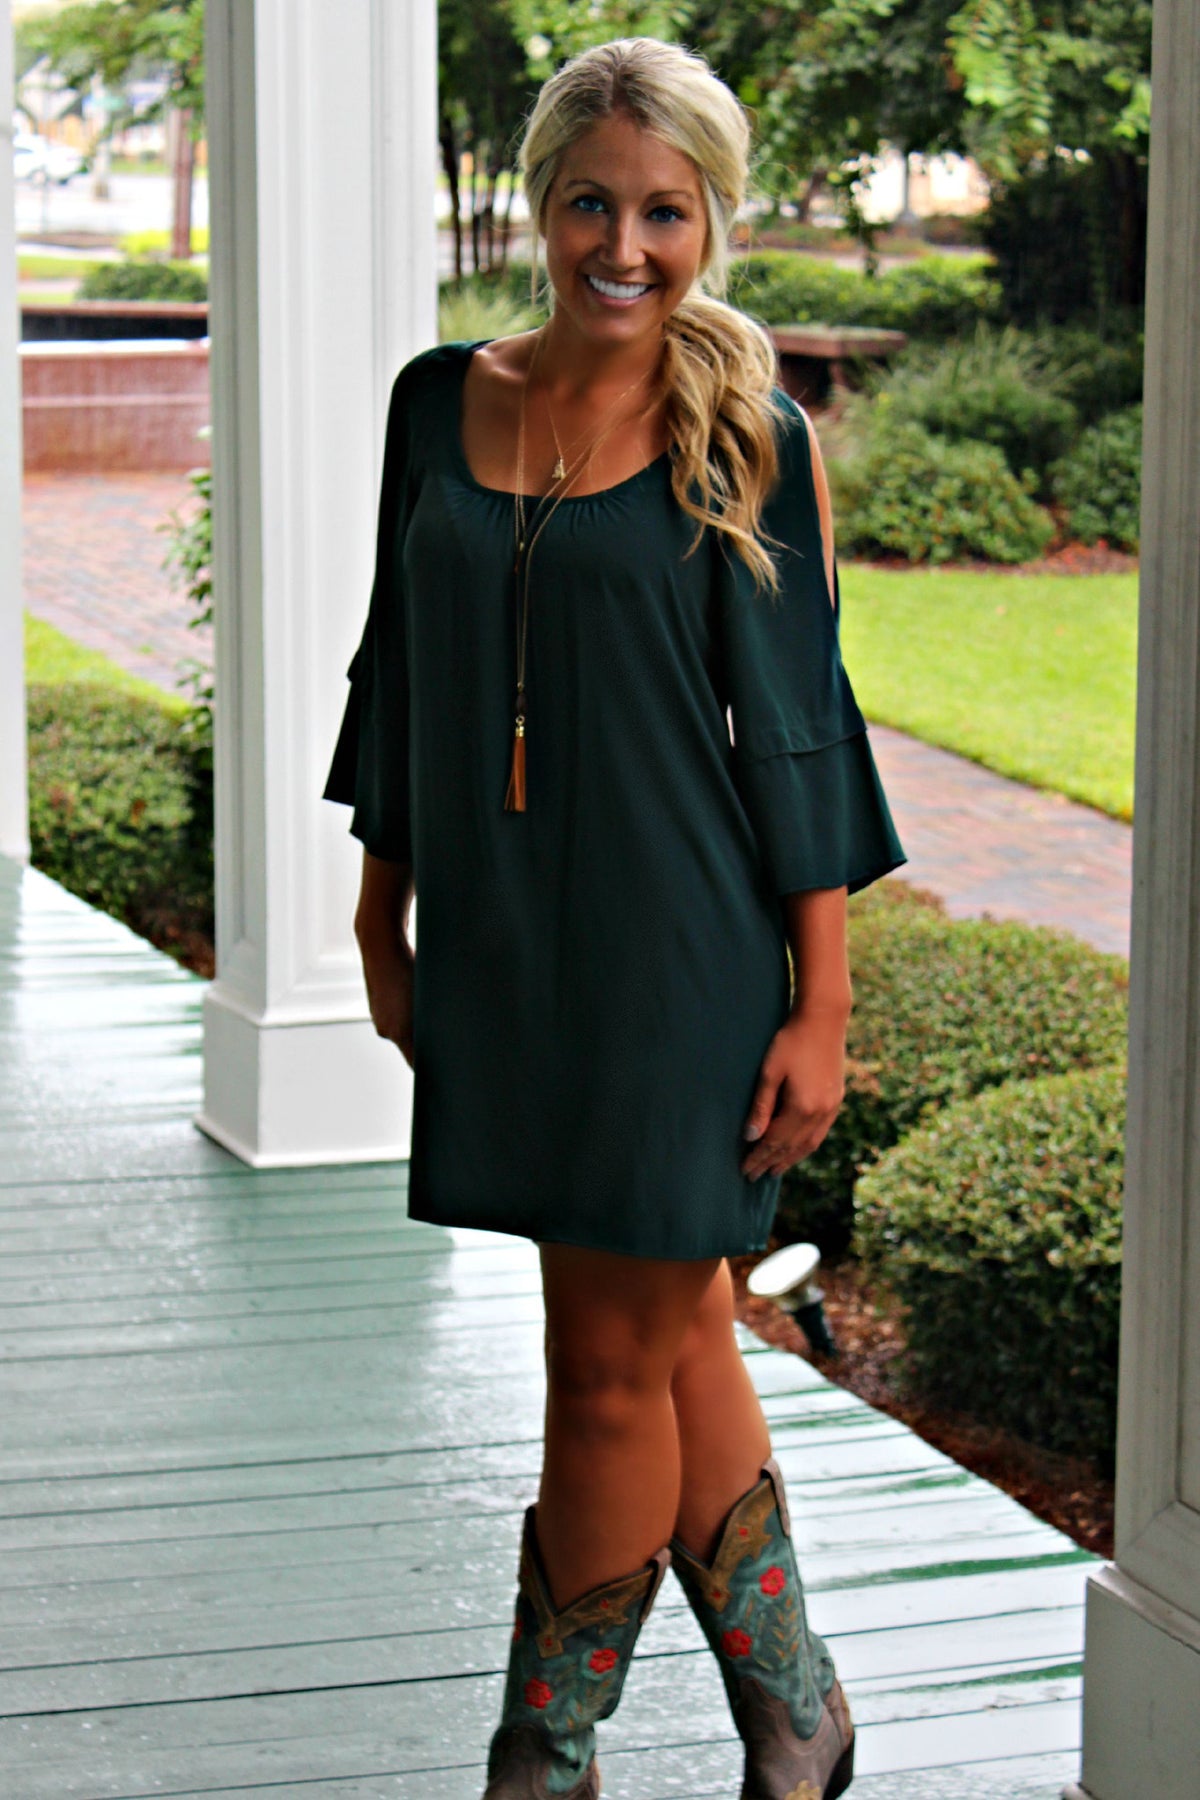 Glam: Laney Dress, Green